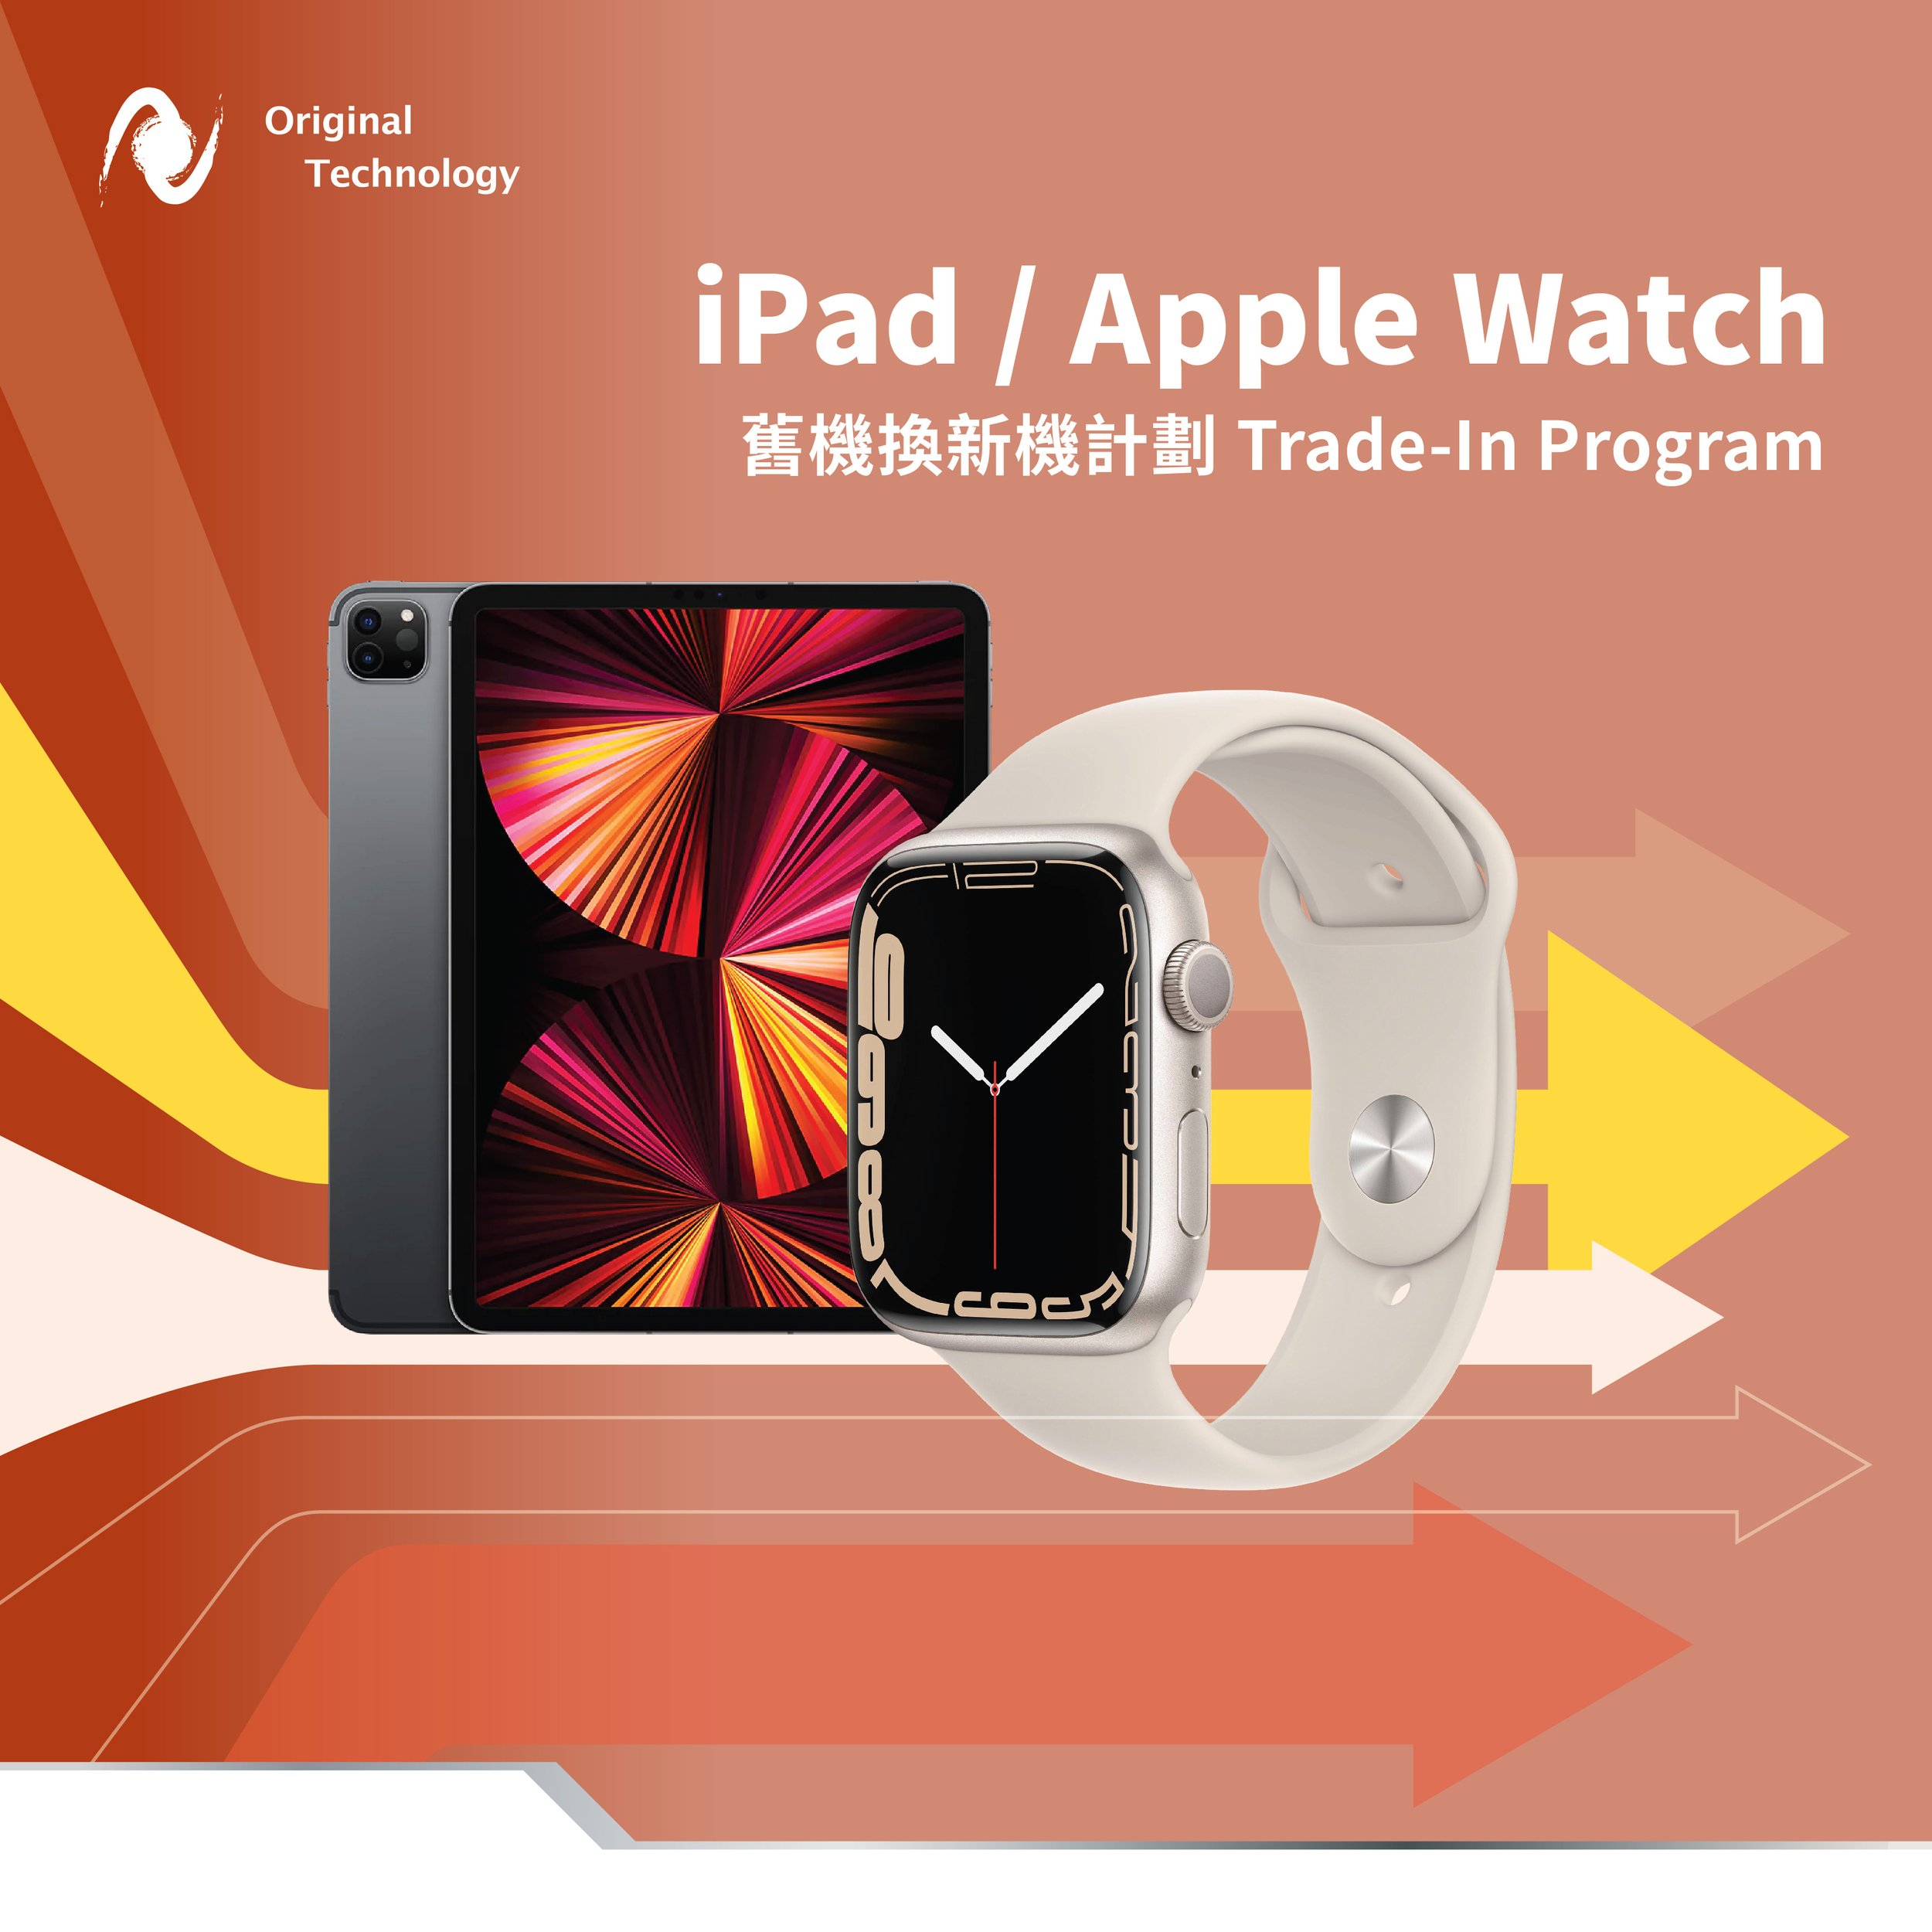 OH03_Trade-in_iPad_Watch_01-02.jpg